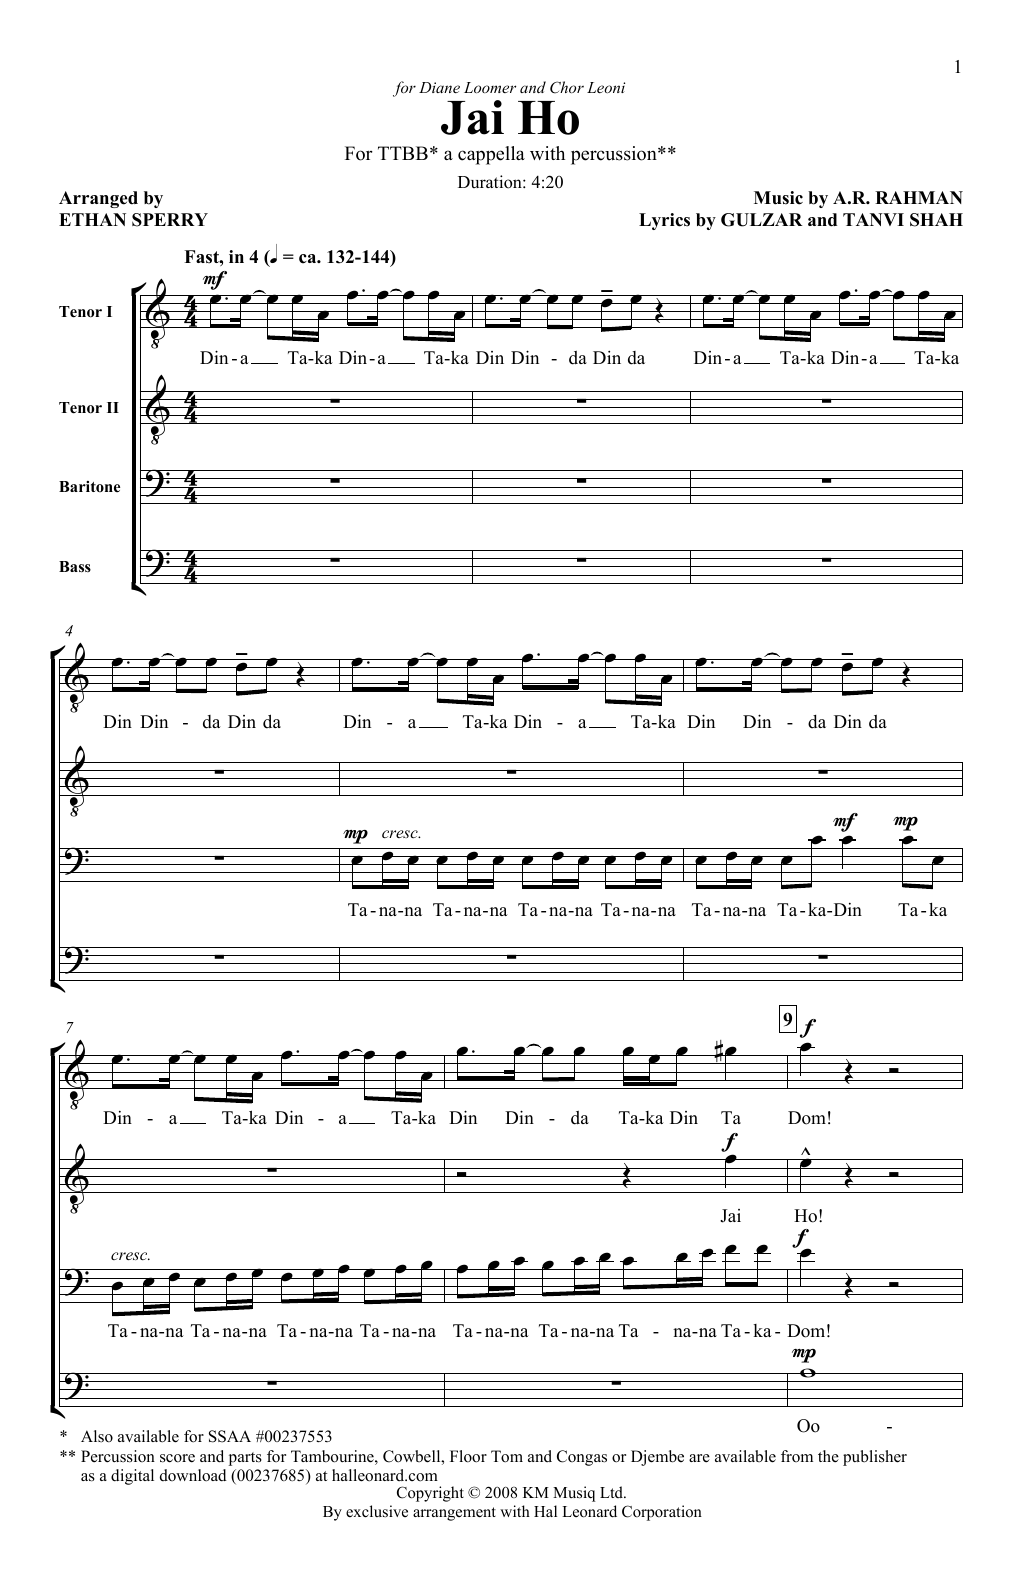 Ethan Sperry Jai Ho sheet music notes and chords arranged for TTBB Choir